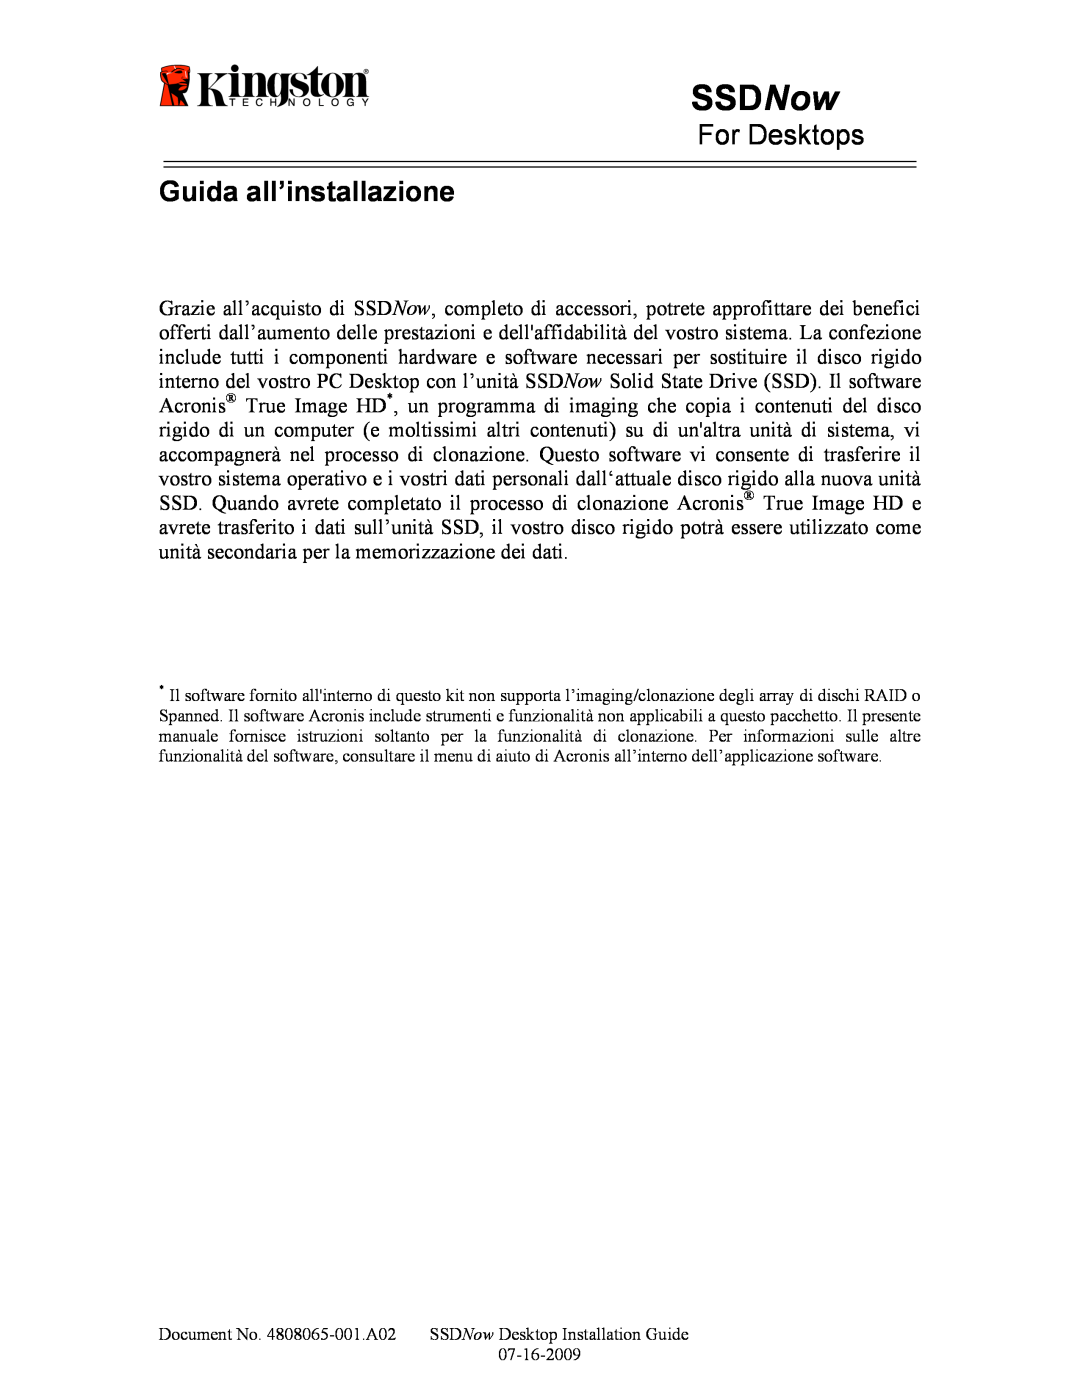 Kingston Technology 07-16-2009 manual Guida all’installazione, SSDNow, For Desktops 